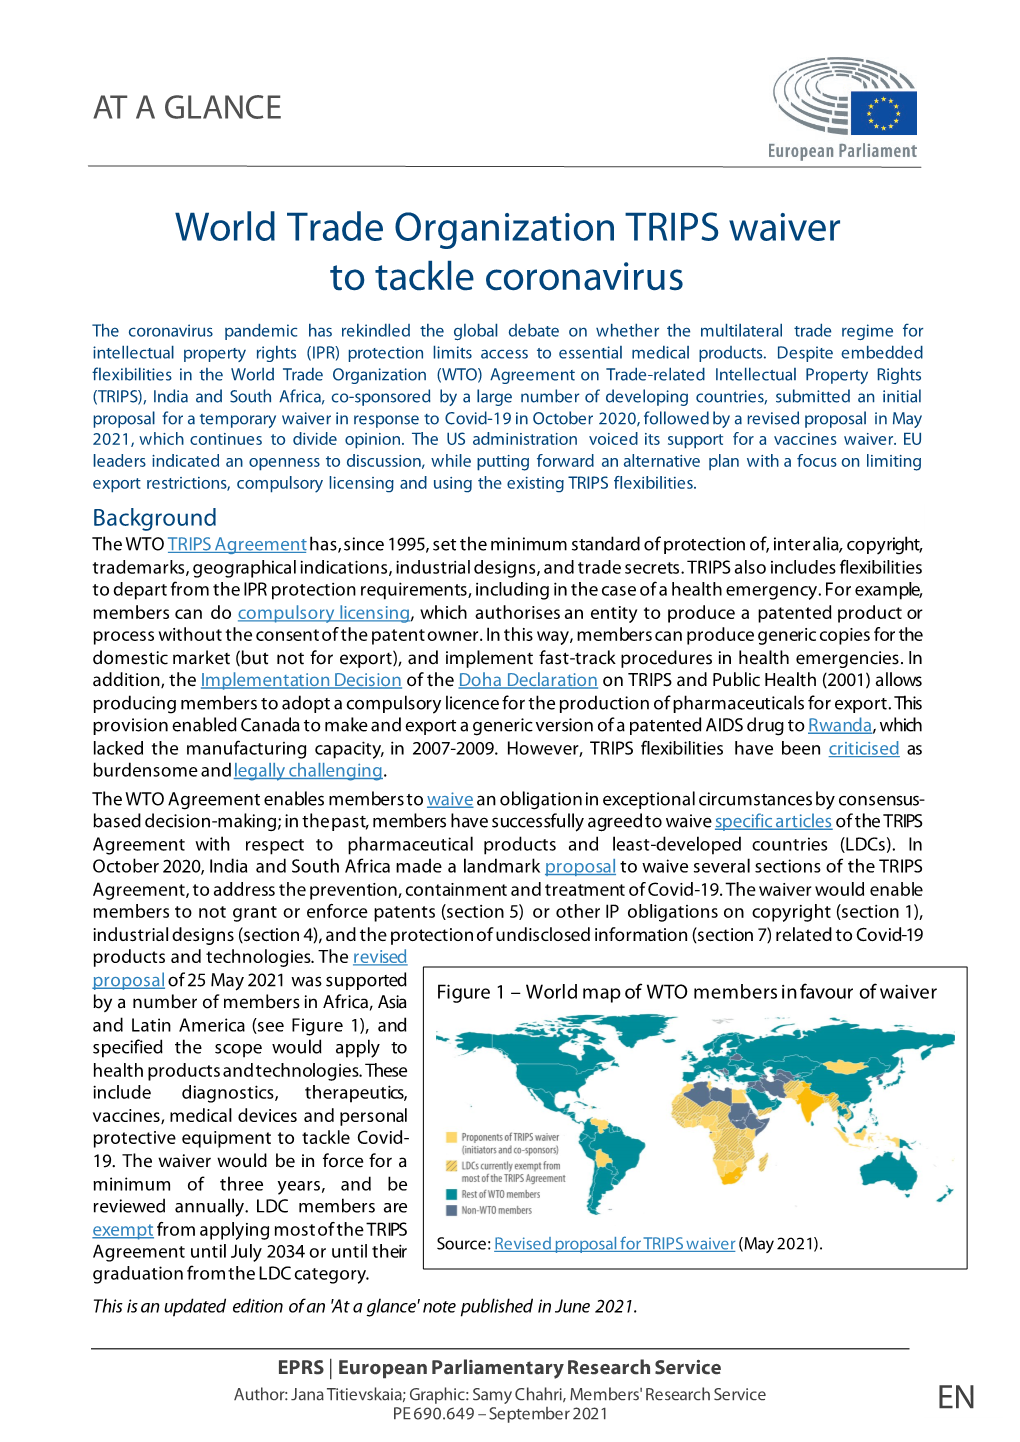 World Trade Organization TRIPS Waiver to Tackle Coronavirus